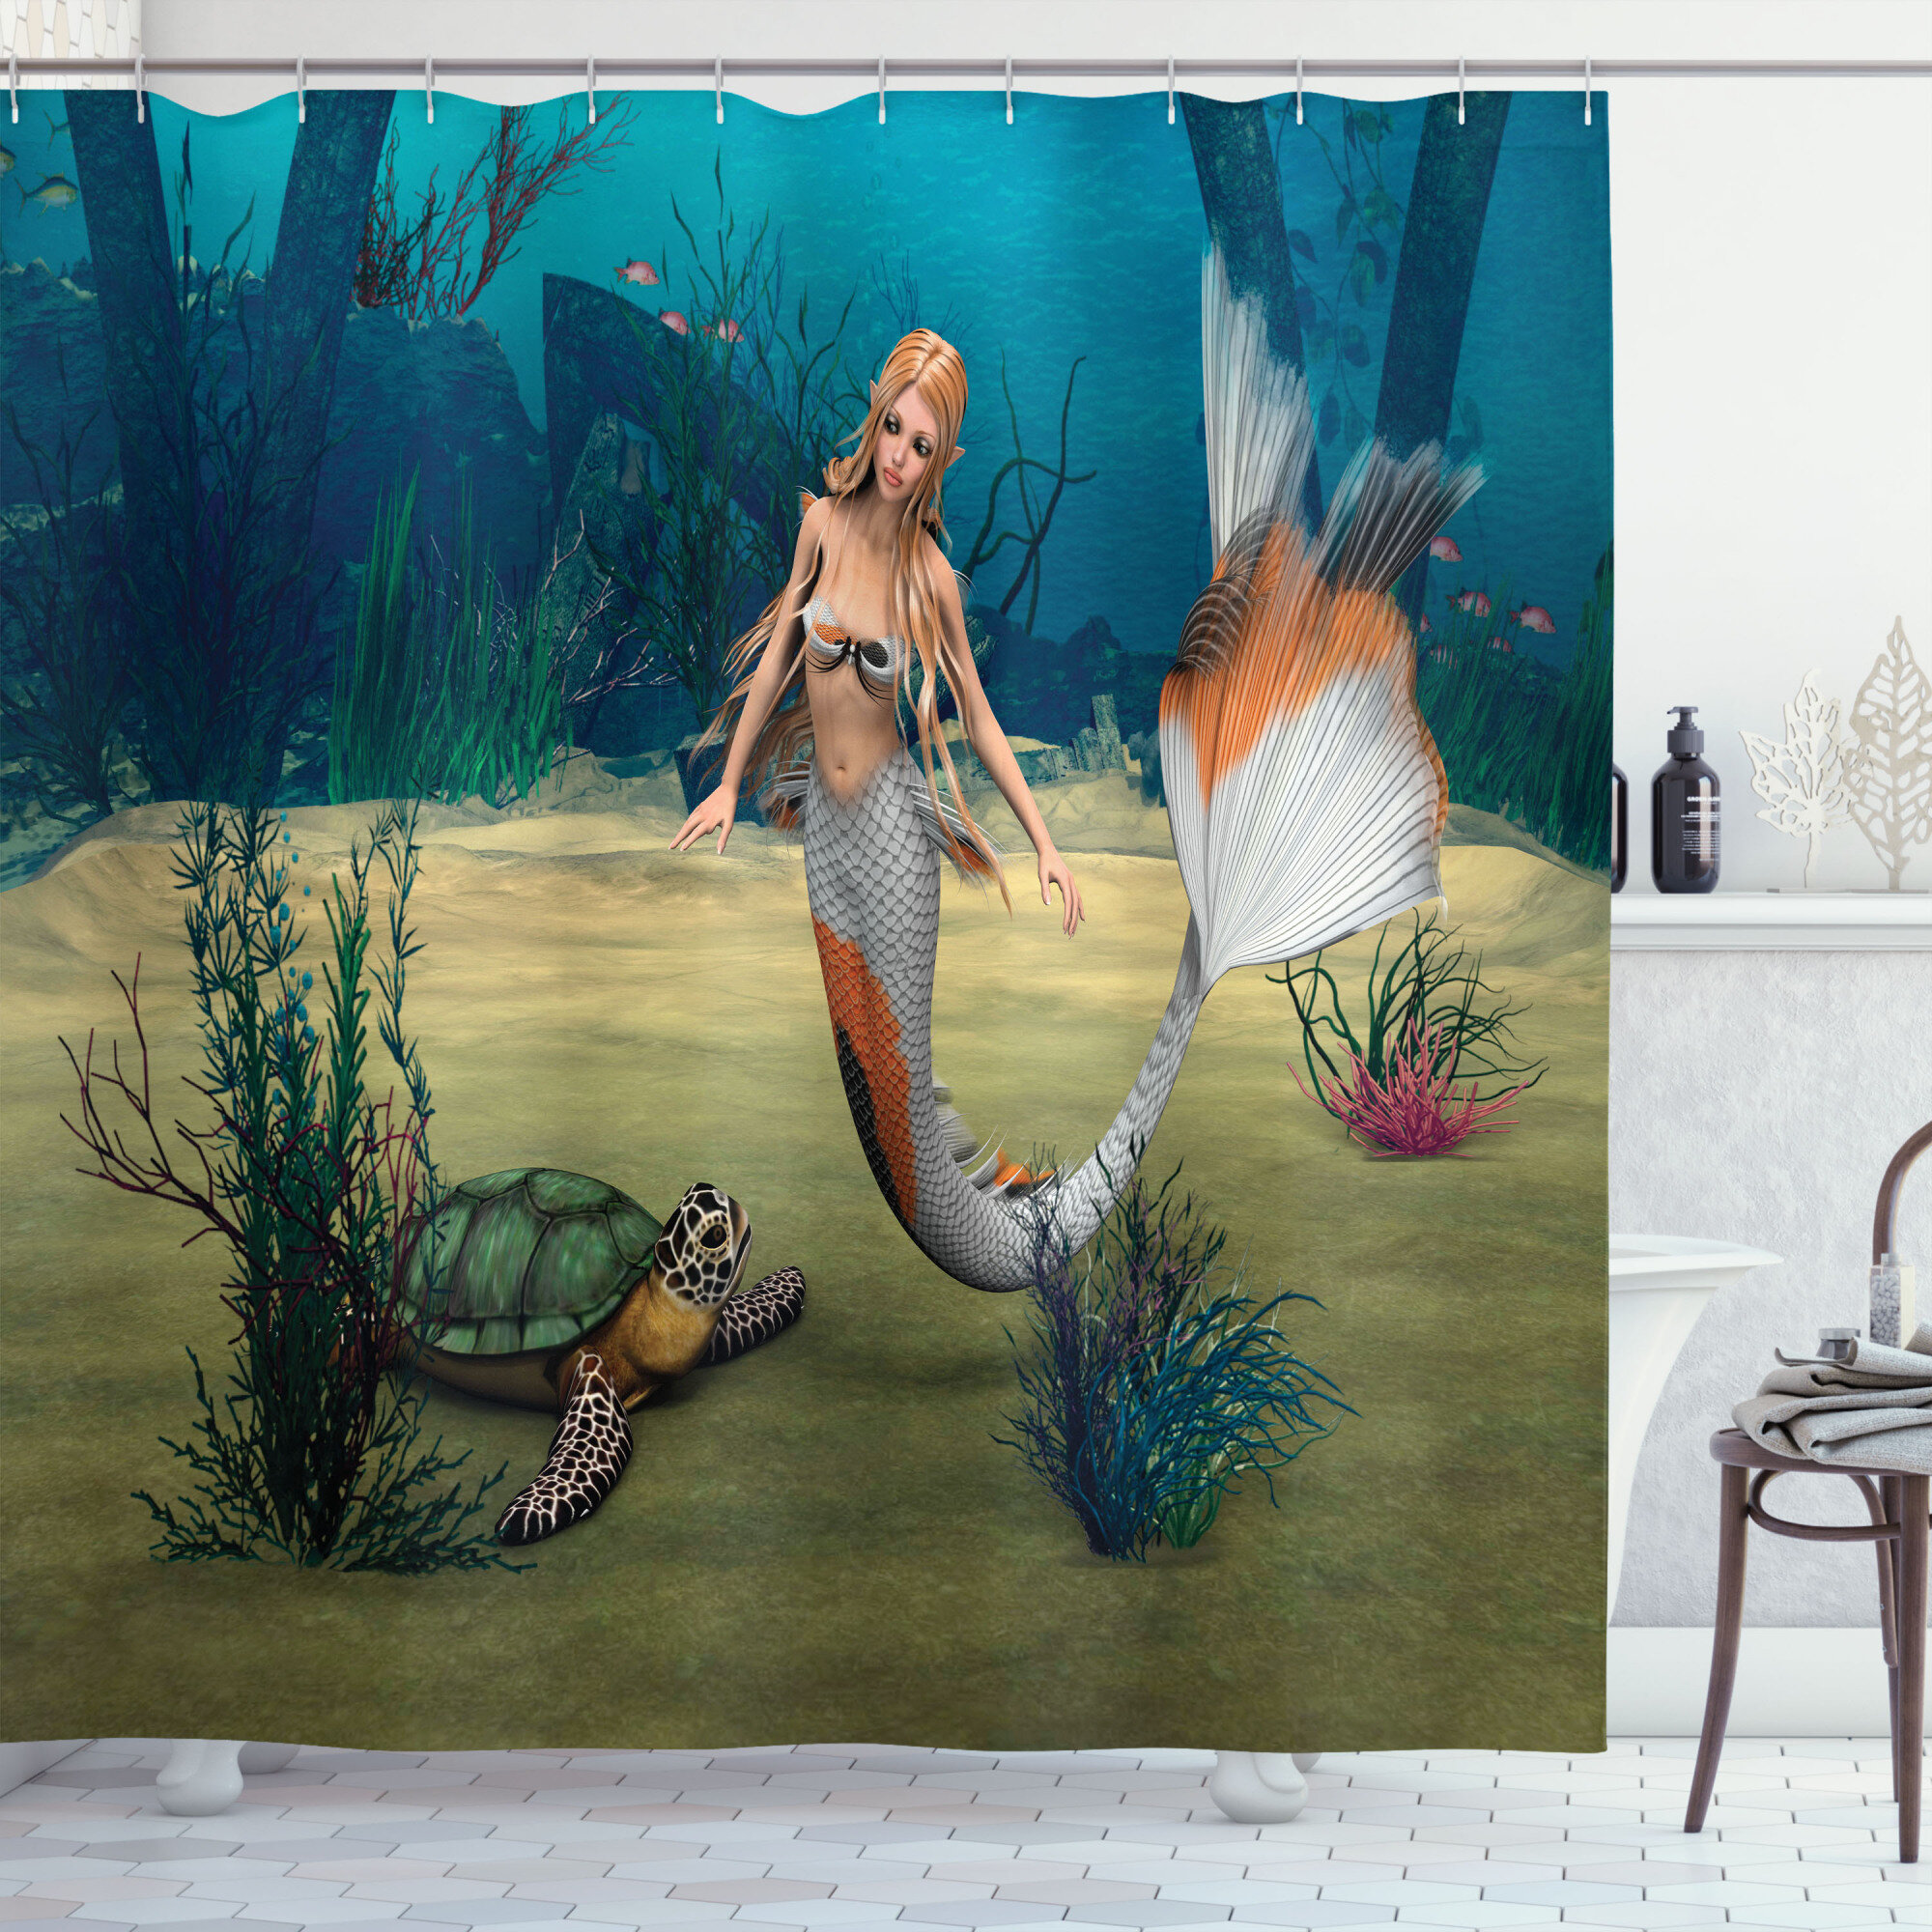 Mermaid Shower Curtain Set + Hooks East Urban Home Size: 84 H x 69 W